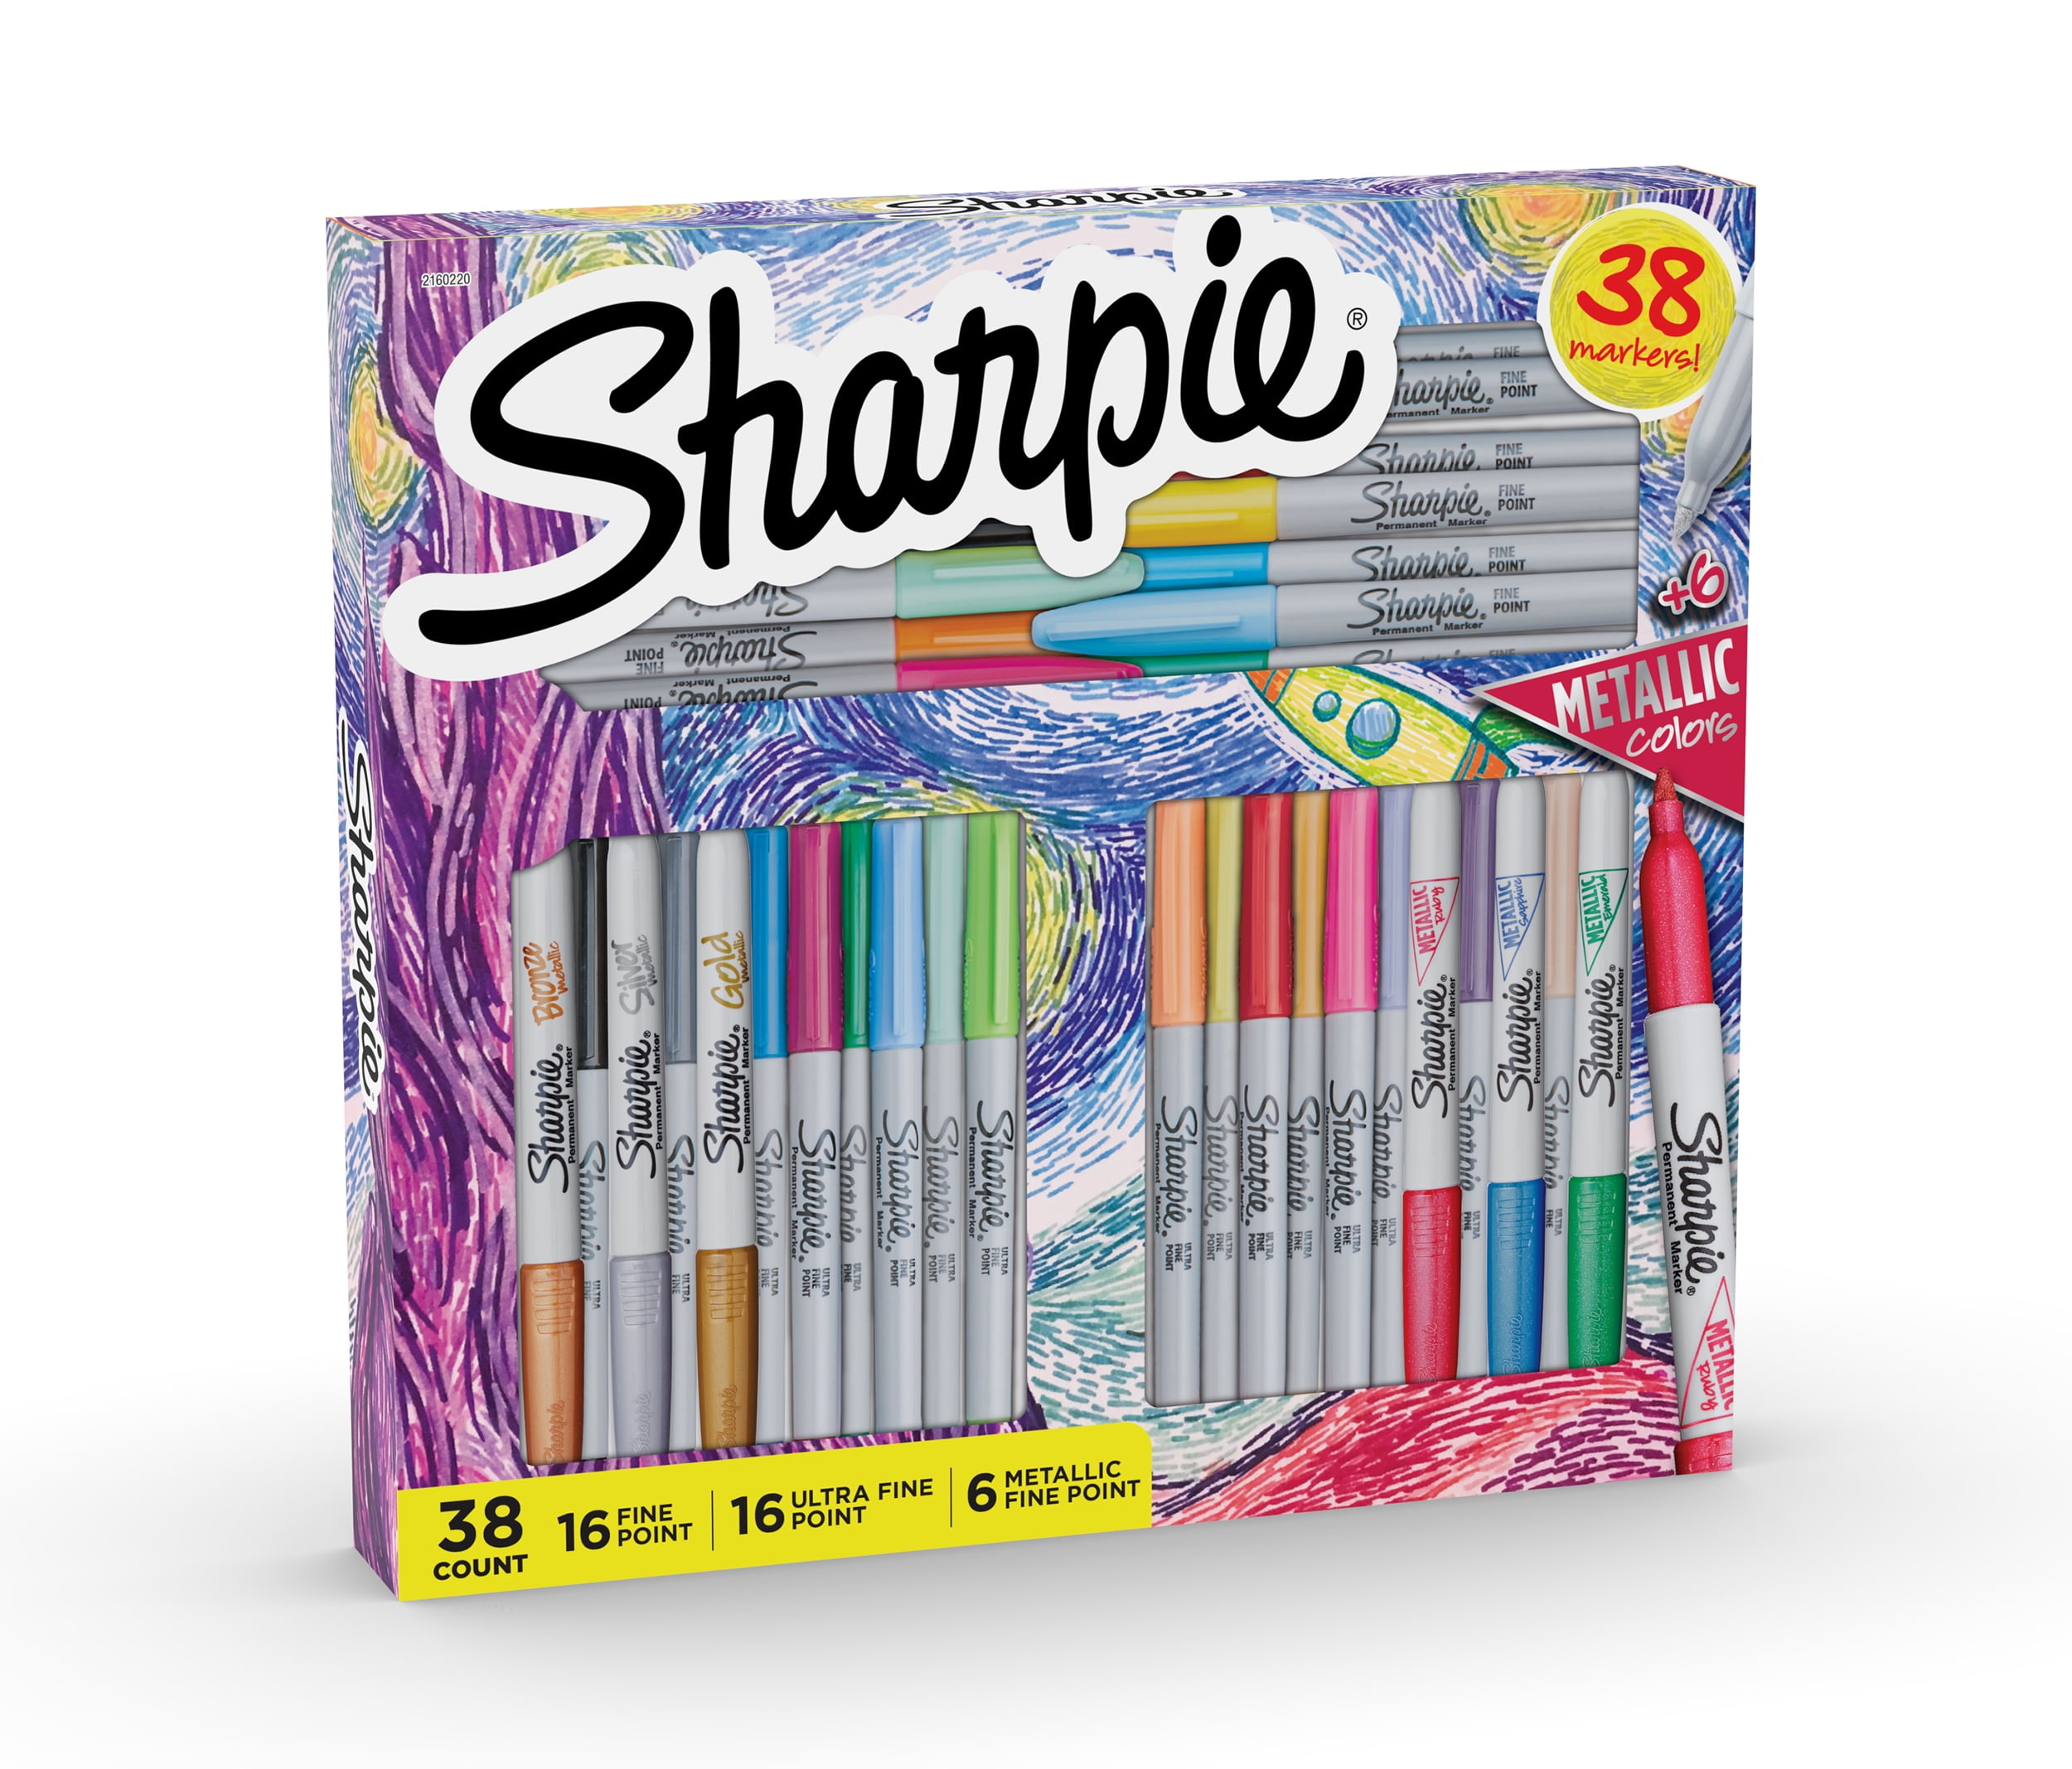 Sharpie Standard Marker Pen - Fine Point - 6 Color Set